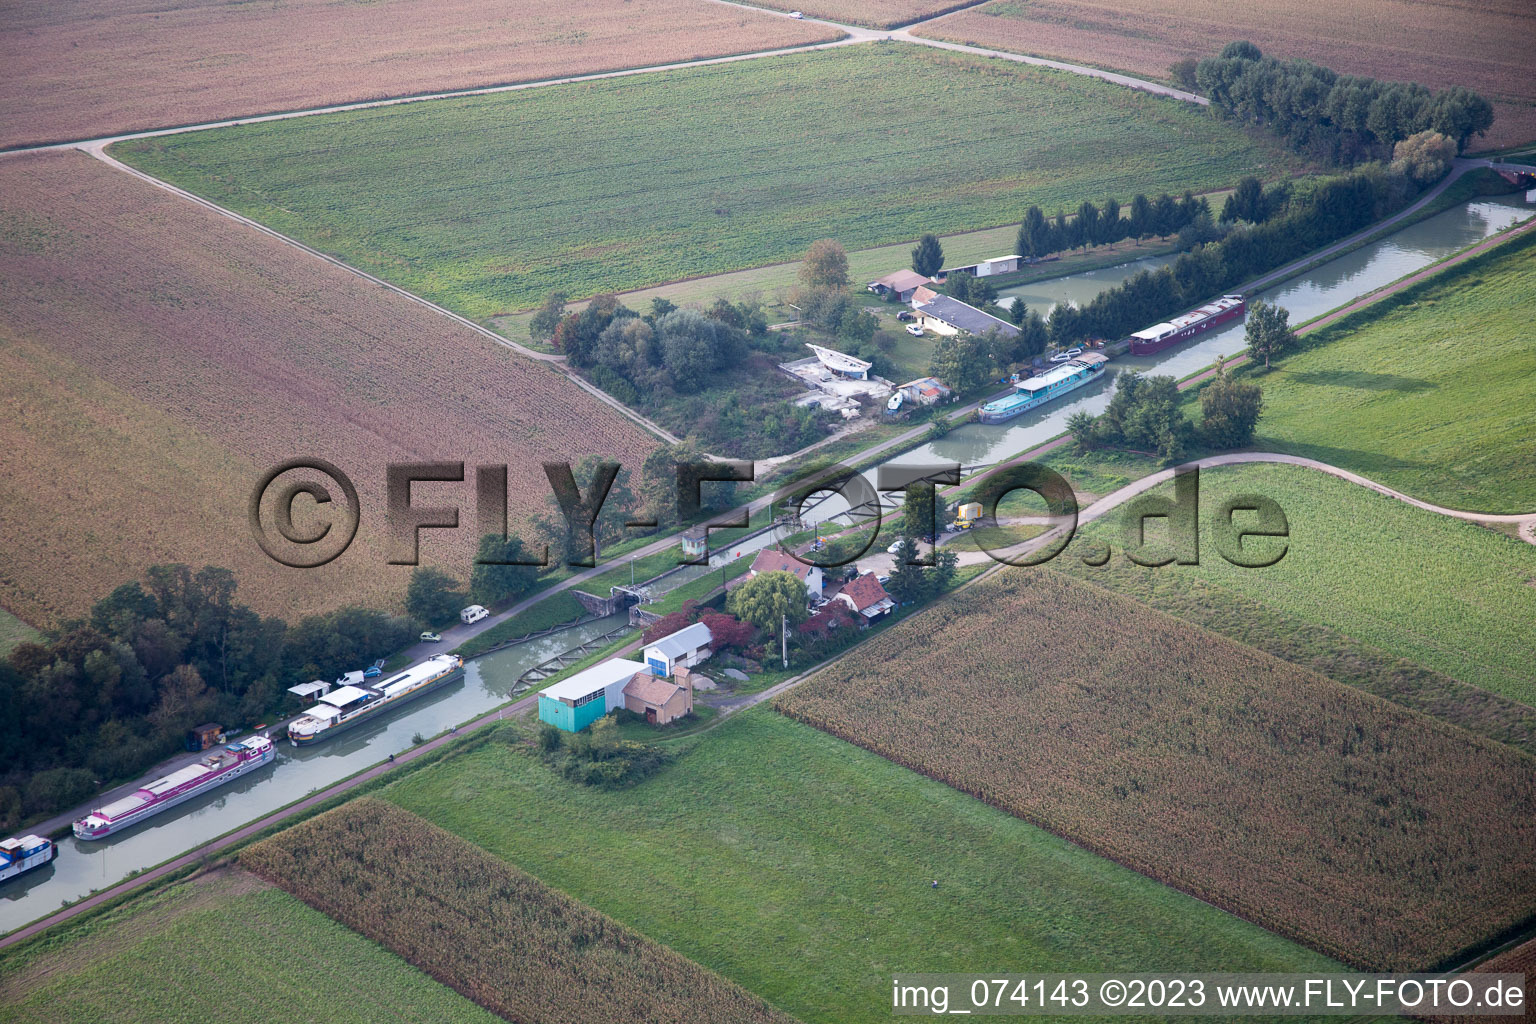 Vendenheim in the state Bas-Rhin, France viewn from the air